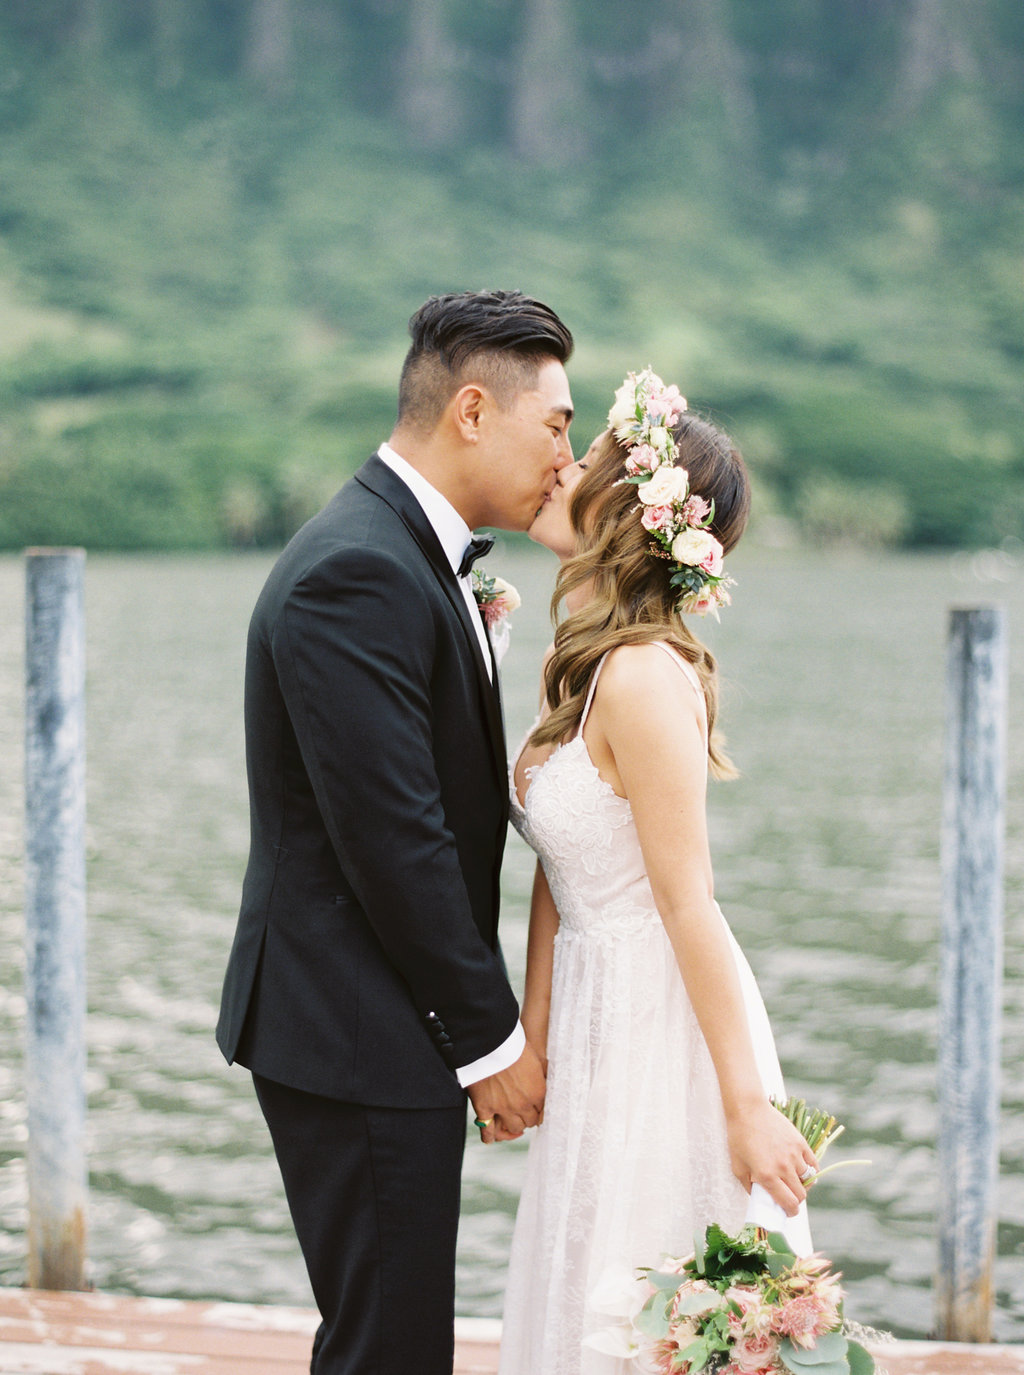 Genevieve and Christopher - Oahu wedding - Hawaii and destination fine art wedding photographer Alice Ahn